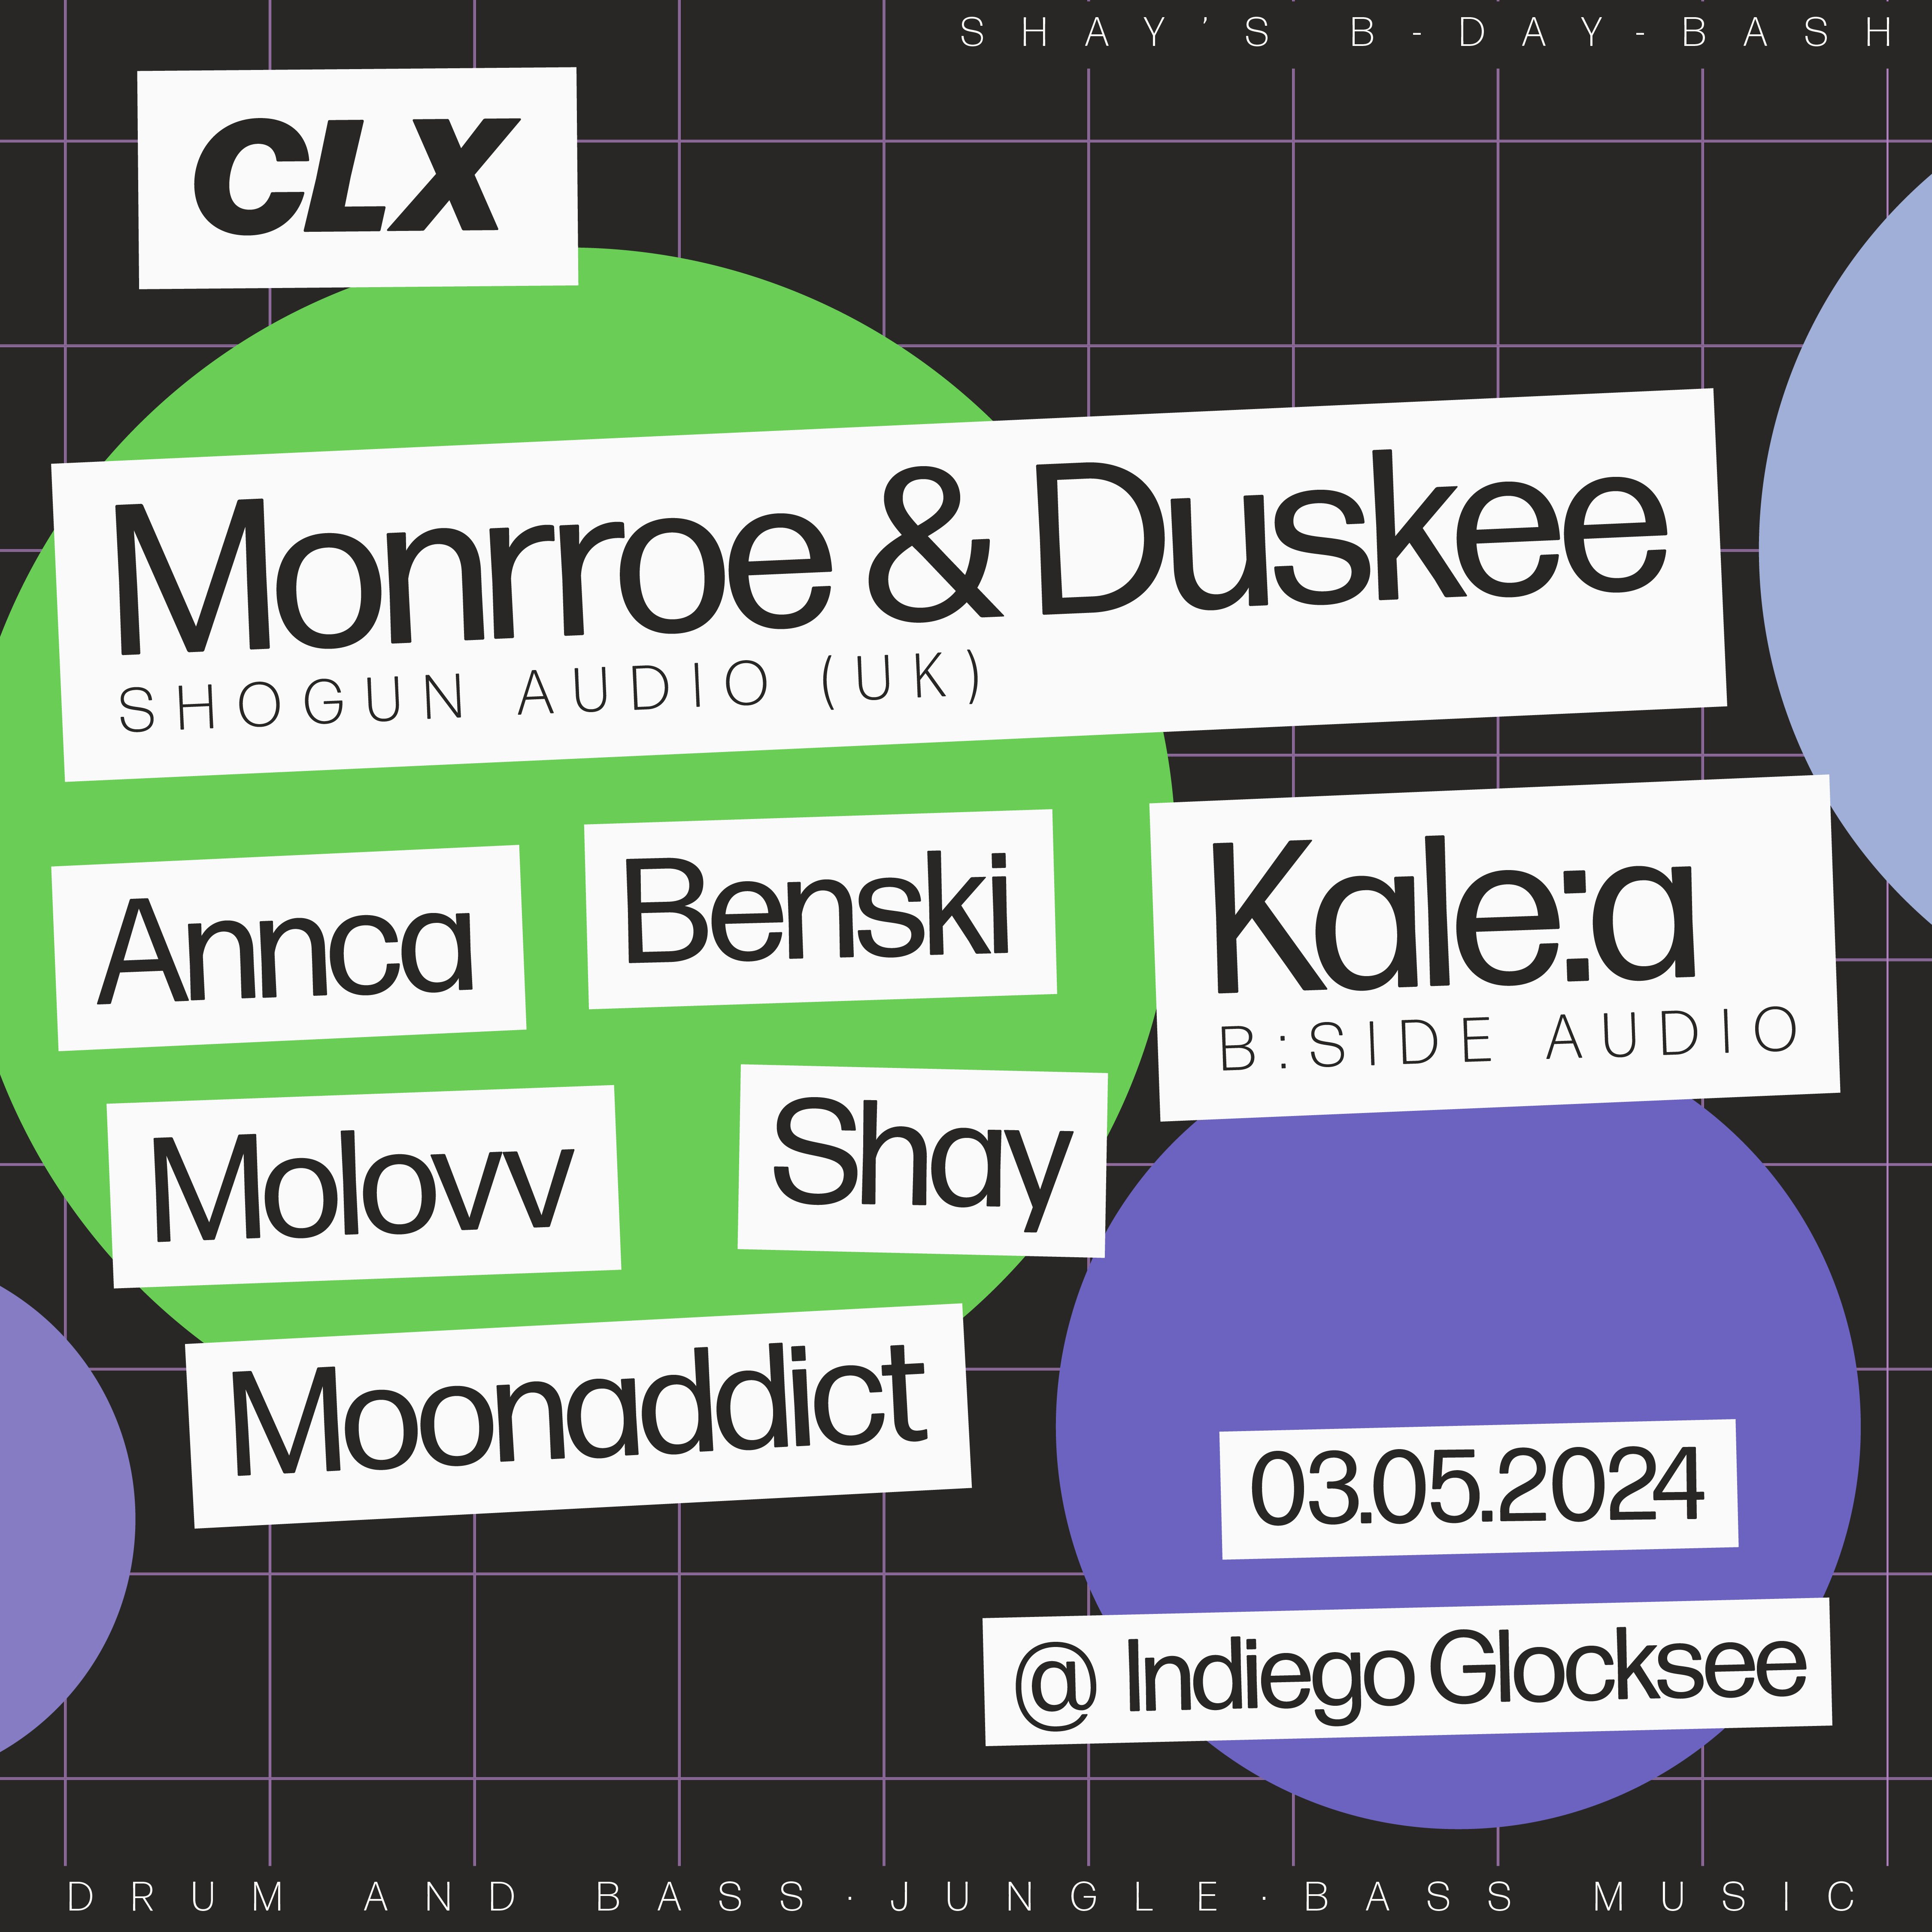 CLX with Monrroe & Duskee (Shogun Audio / UK) - フライヤー表